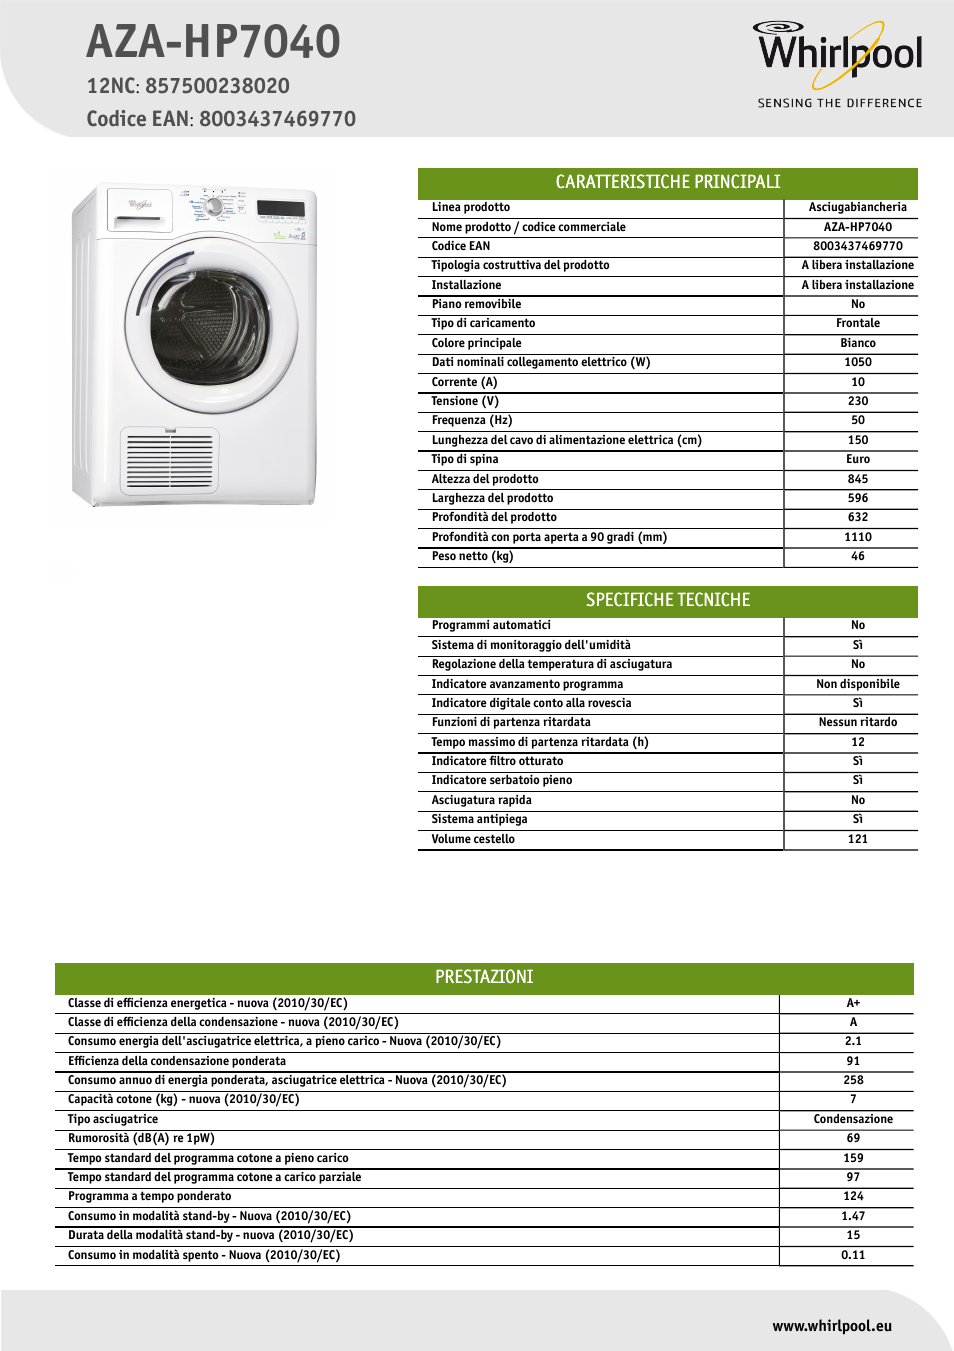 Whirlpool AZA-HP7040 Manuale d'uso | Pagine: 1